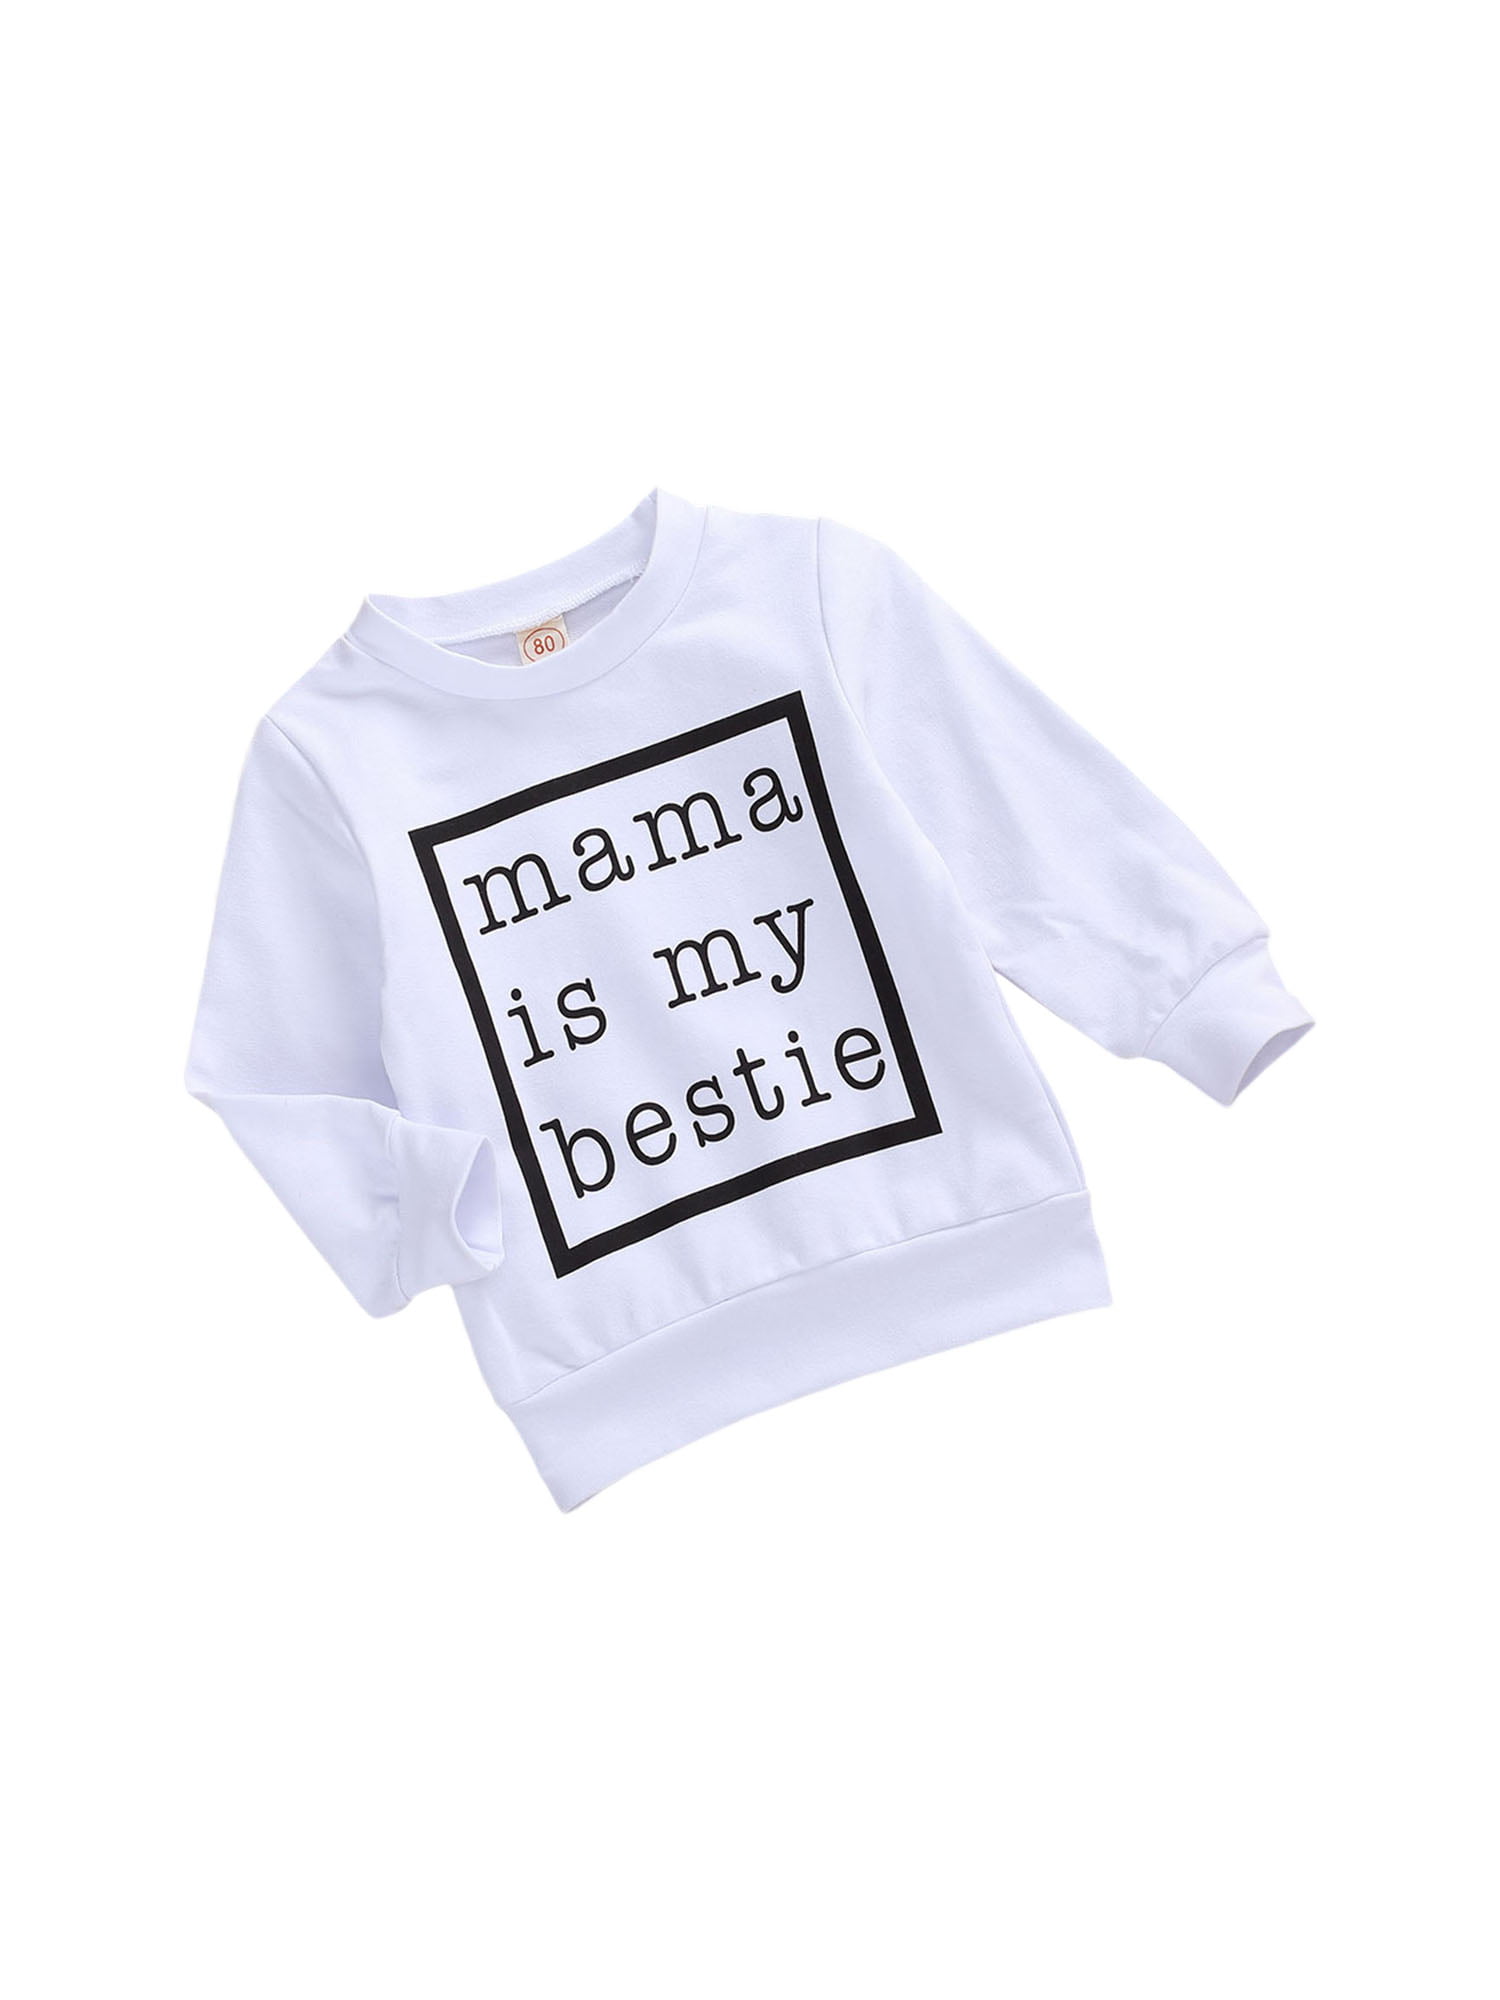 Mxiqqpltky Baby Girl Pullover Sweatshirt,Toddler Crewneck Long Sleeve Tops,Newborn Fall Winter Cotton Blouse Outfit 